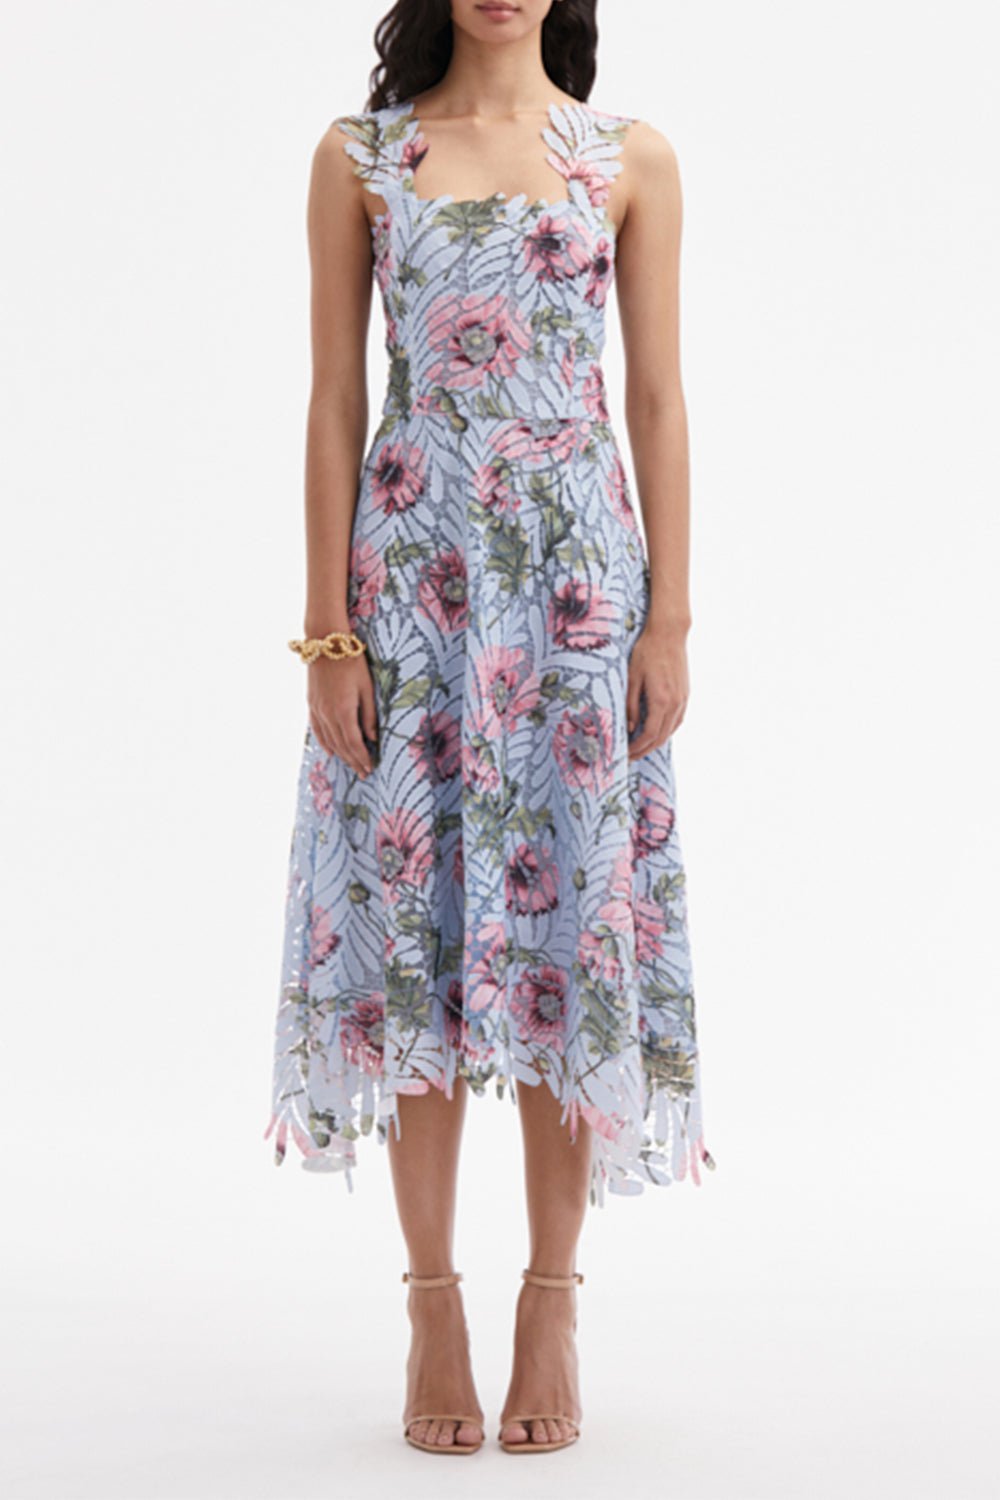 OSCAR DE LA RENTA-Sleeveless Poppies Printed Dress-